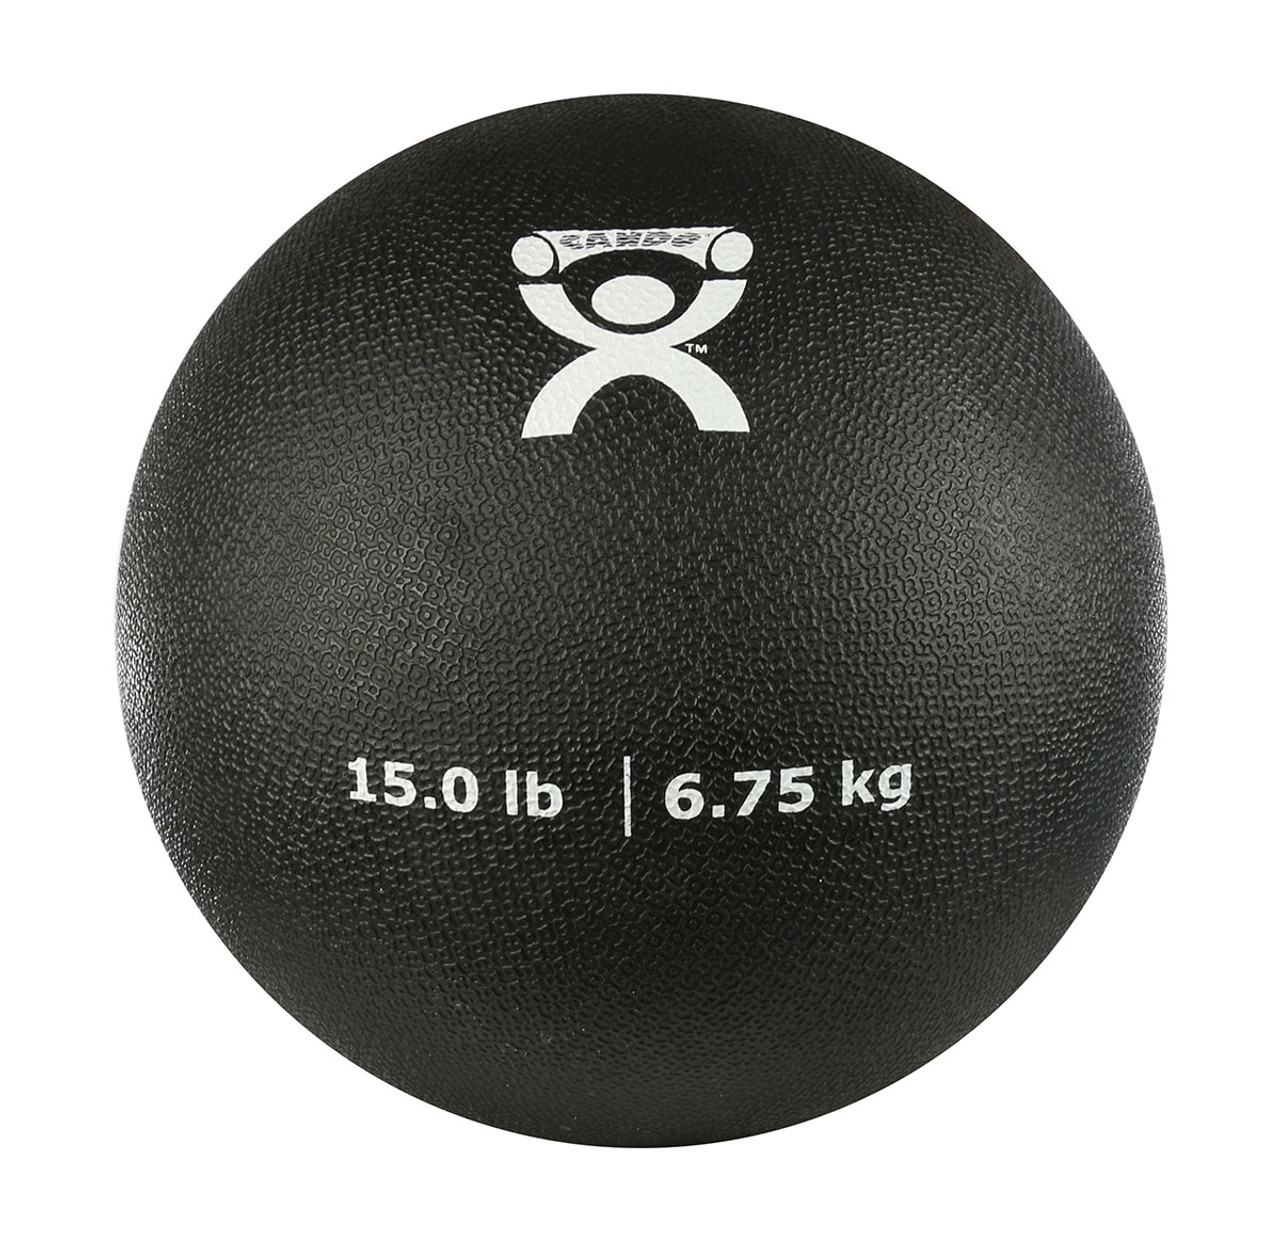 CanDo¨ Soft Pliable Medicine Ball - 9" Diameter - Black - 15 lb